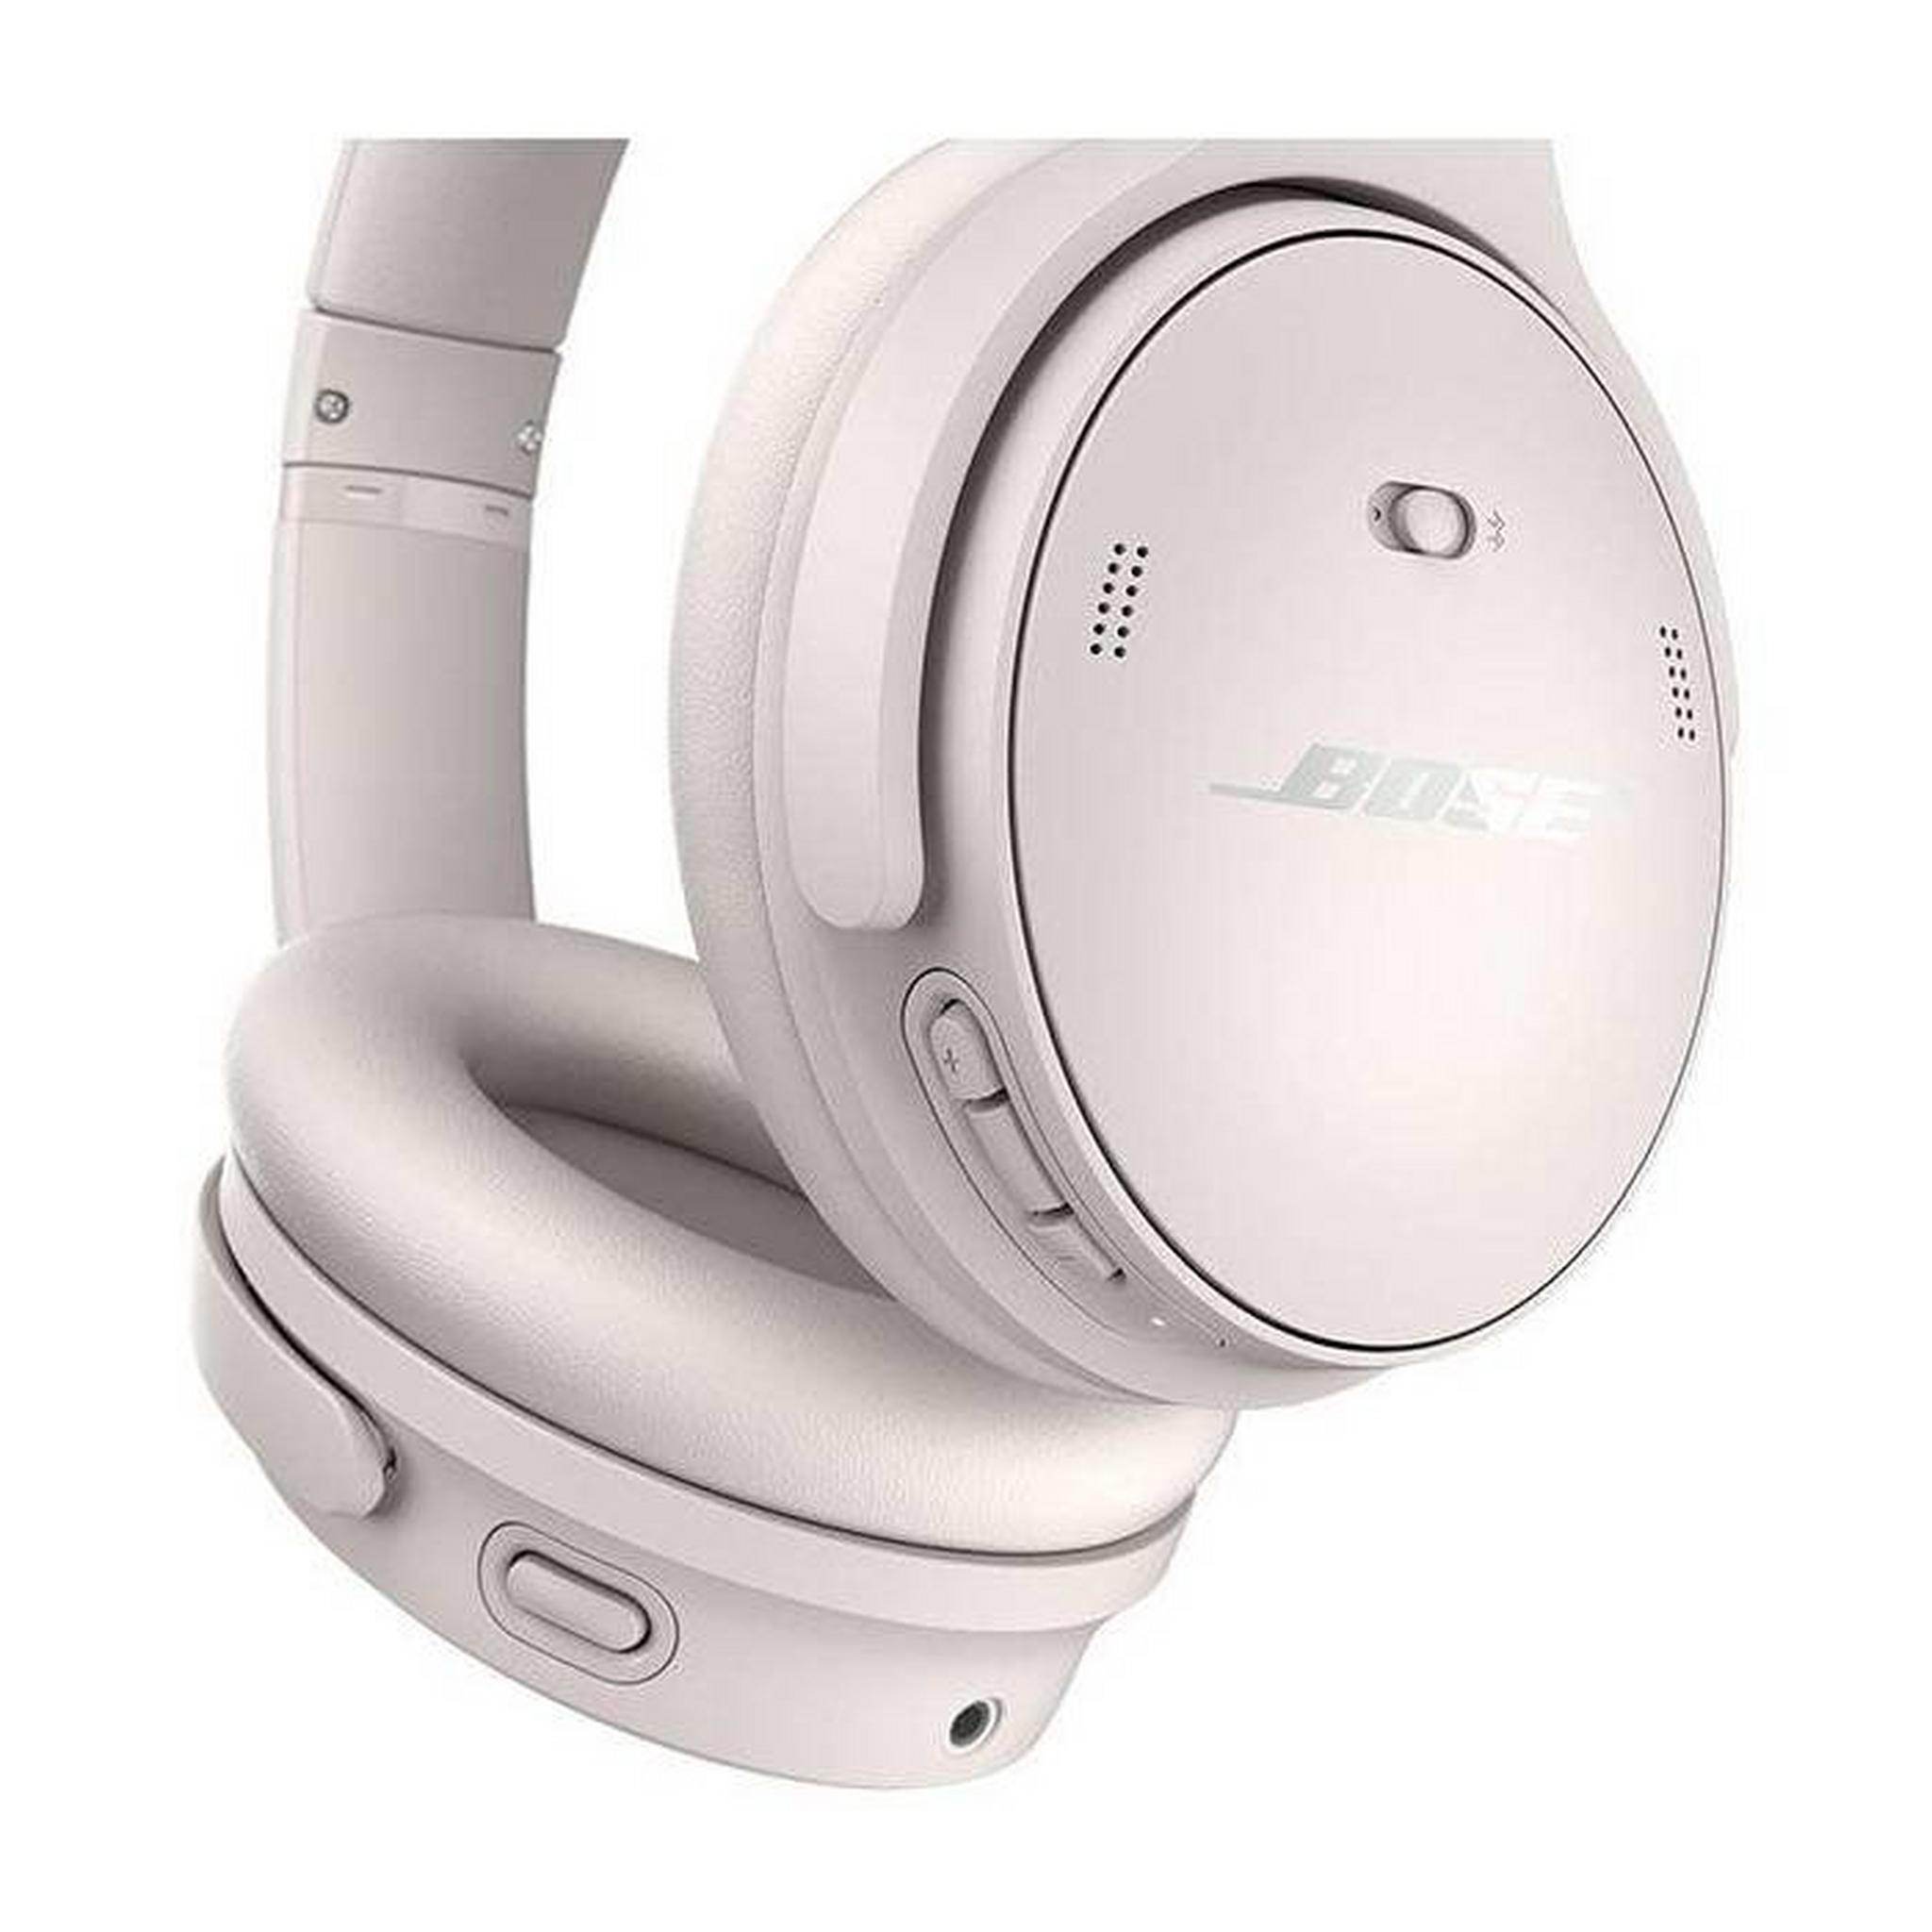 Bose Quiet Comfort Wireless Bluetooth Headphones – White